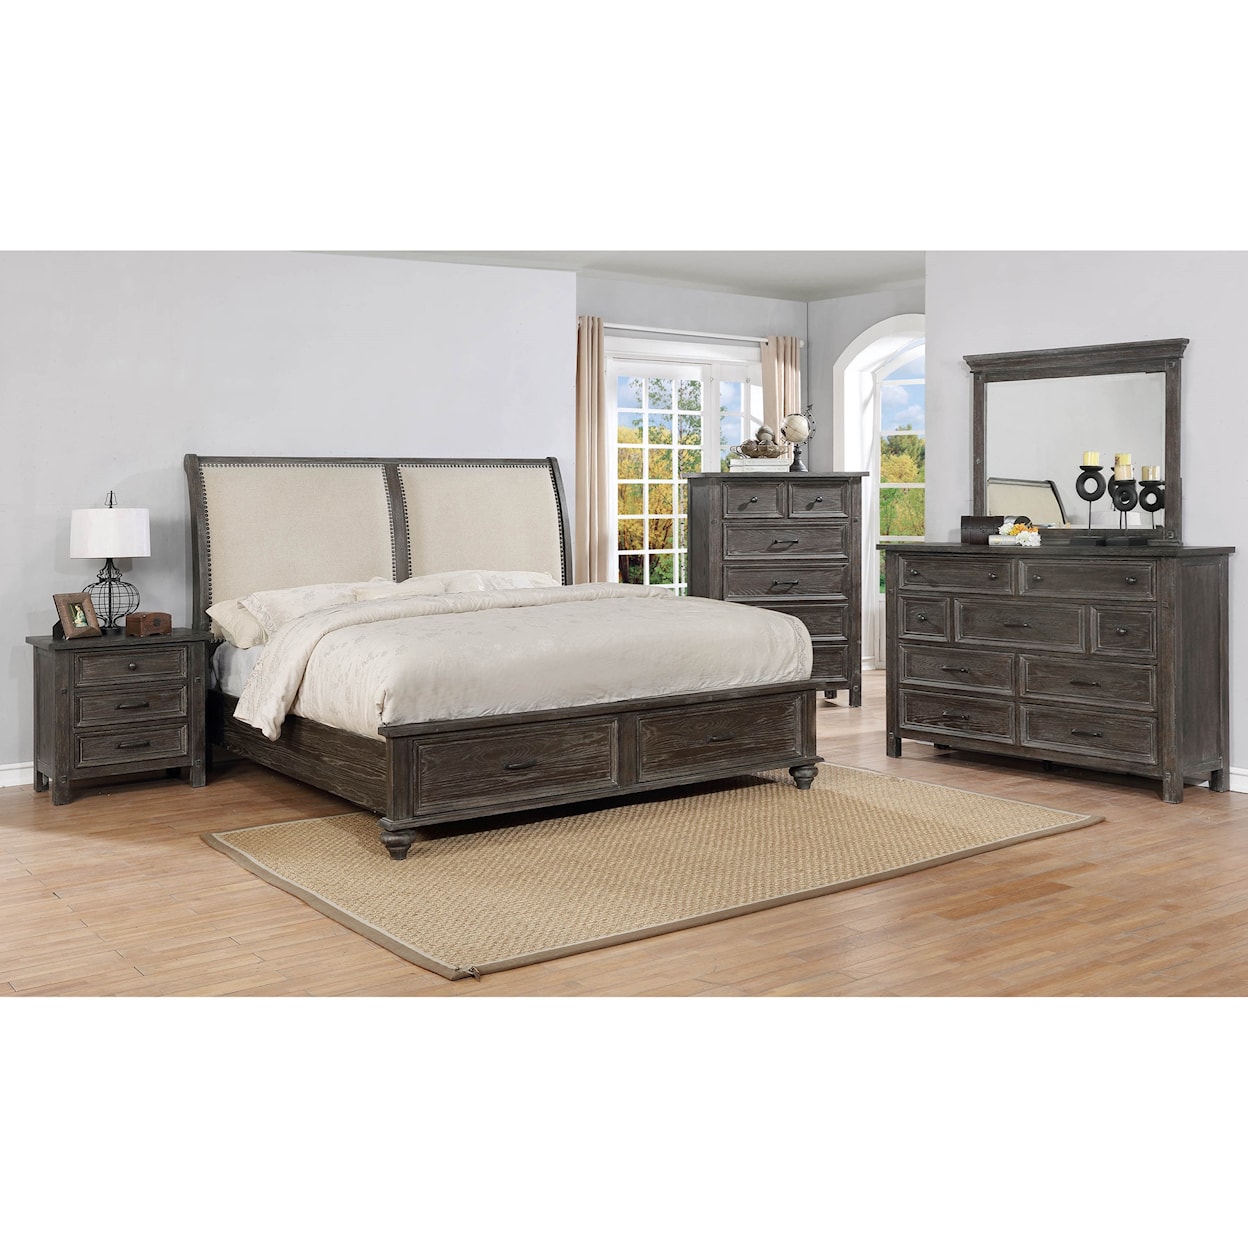 Avalon Furniture B1600 King Bedroom Group